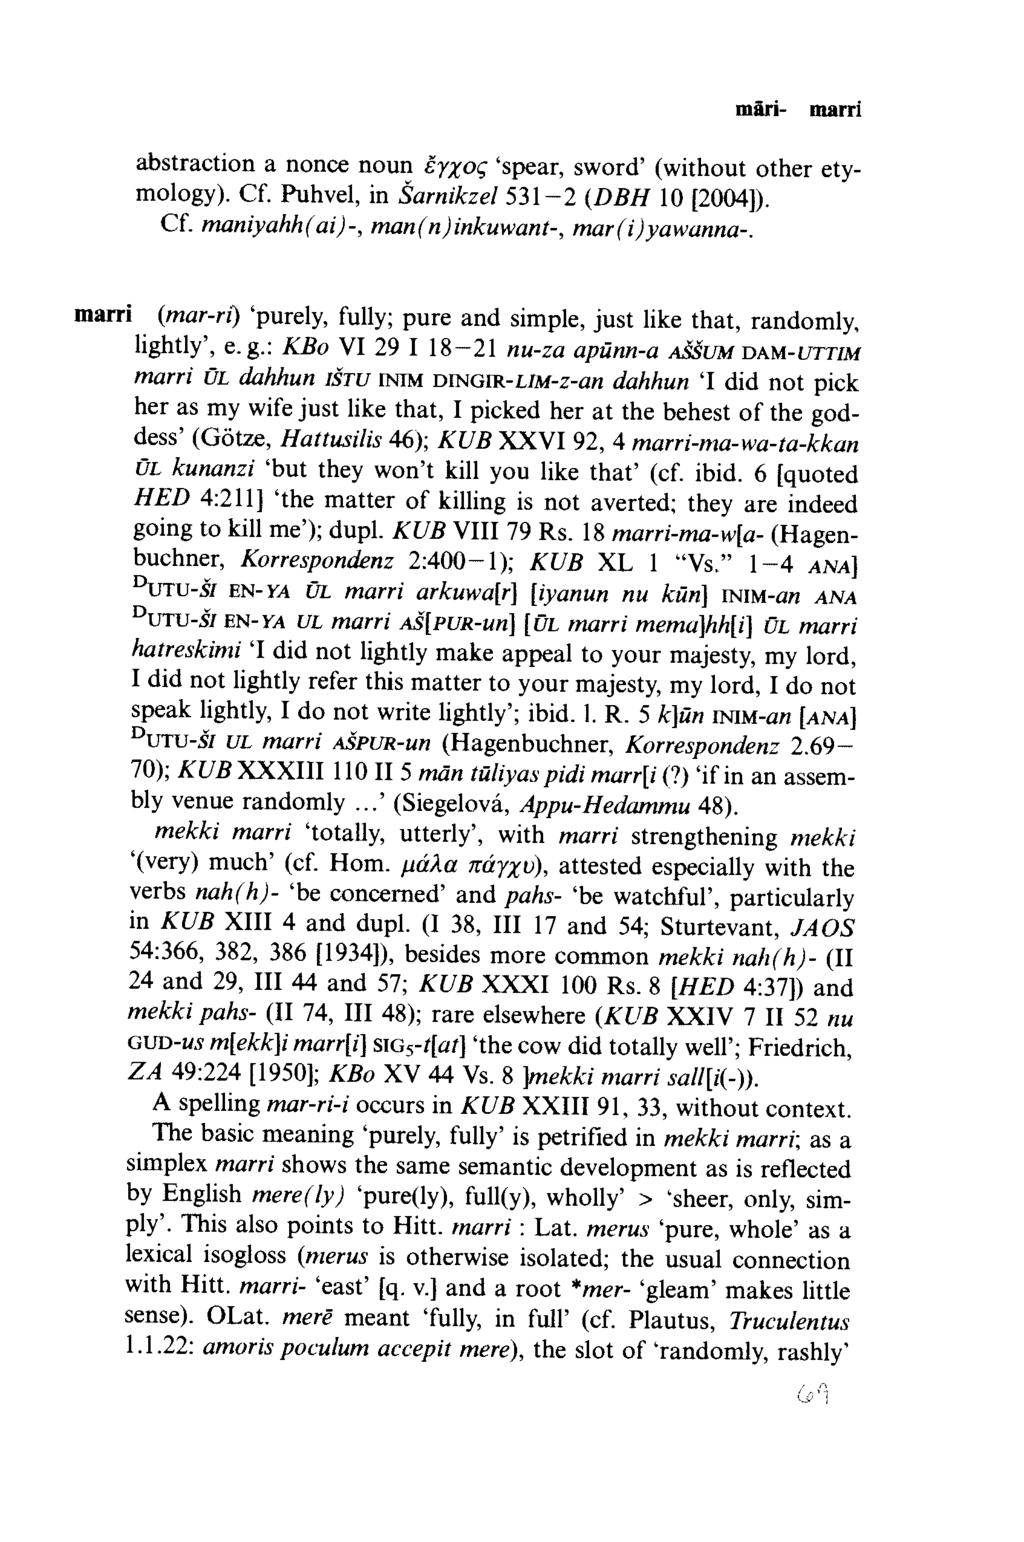 märi- marri abstraction a nonce noun εγχο ς spear, sword (without other etymology). Cf. Puhvel, in Sarnikzel 5 3 1-2 (DBH 10 [2004]). Cf. maniyahh(ai)-, man(n)inkuwant-, mar(i)yawanna-.